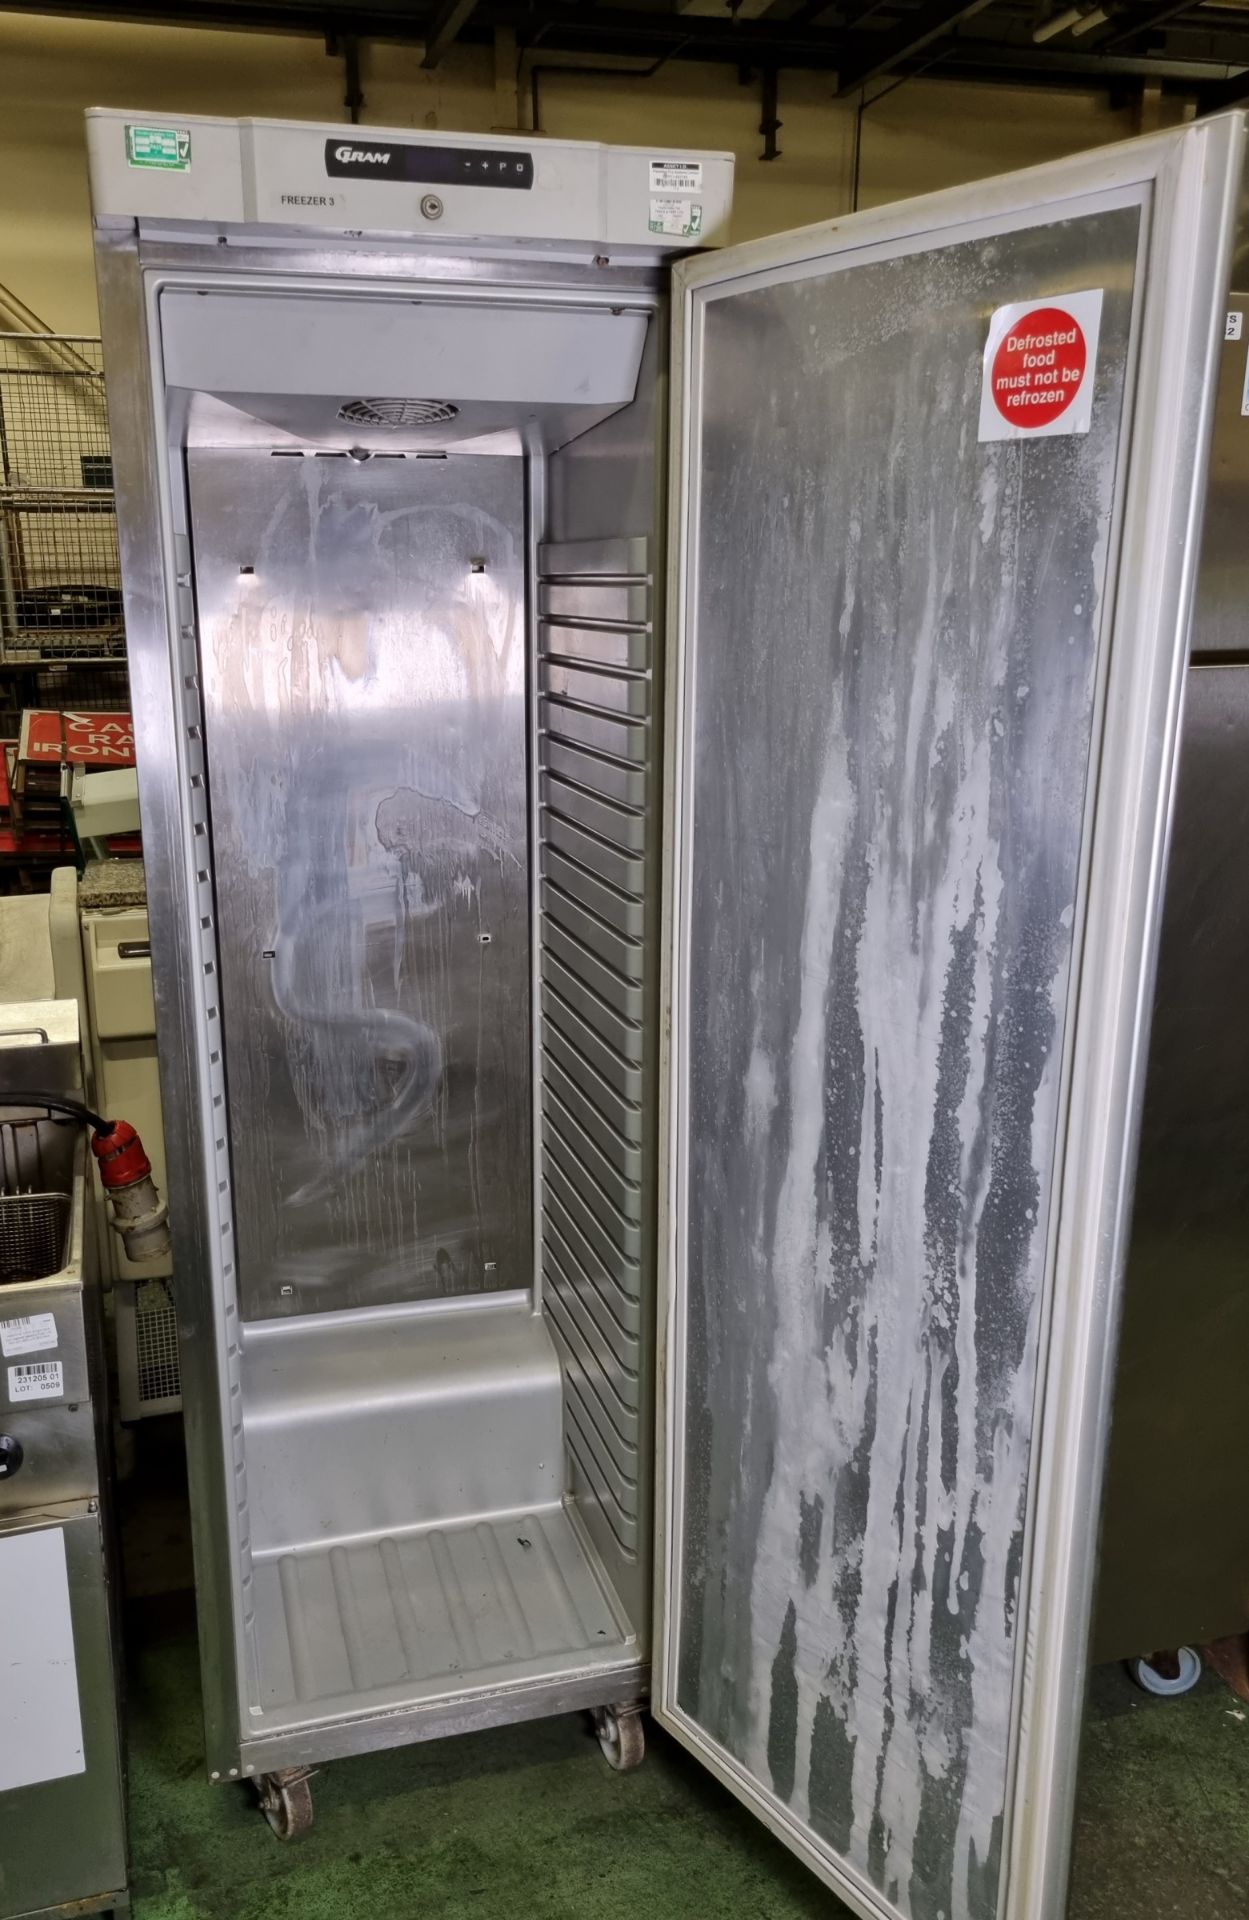 Gram stainless steel single door upright freezer - W 600 x D 650 x H 1910mm - Image 3 of 4